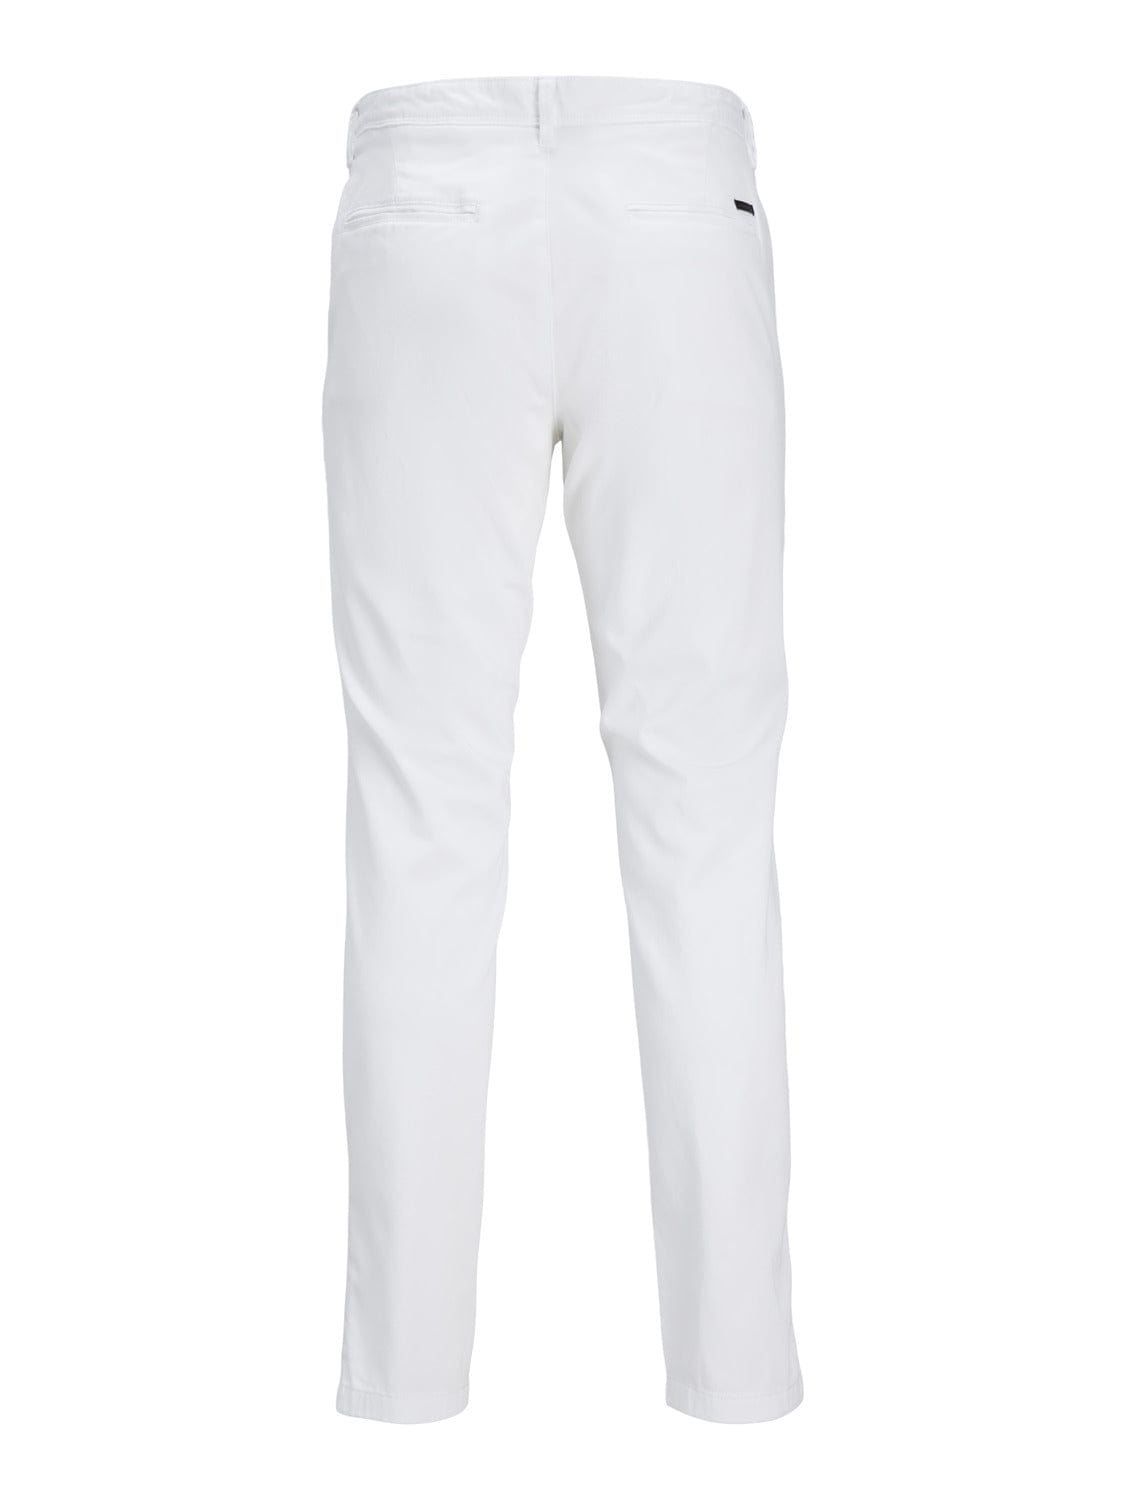 Jack & Jones Jjiglenn Jjicon Ama 558 White Pantalones, Blanco, 36W